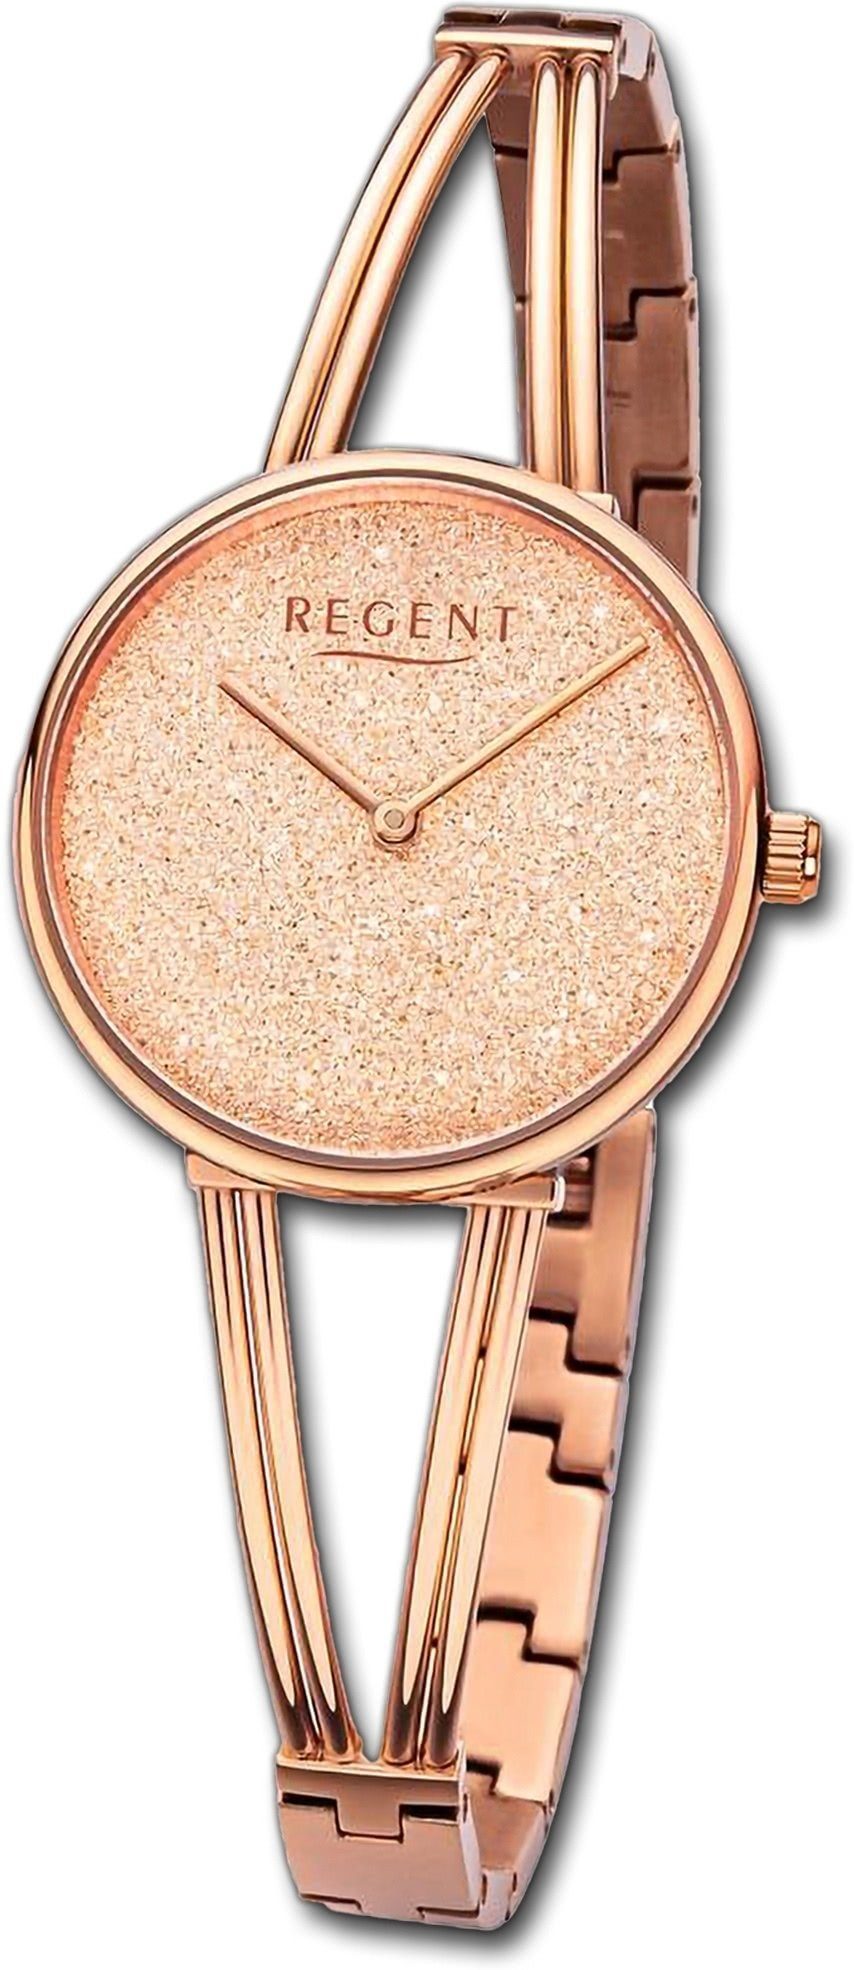 Analog, rundes extra Gehäuse, Armbanduhr Metallarmband Damen 30mm) Damenuhr Regent rosegold, Regent (ca. Quarzuhr groß